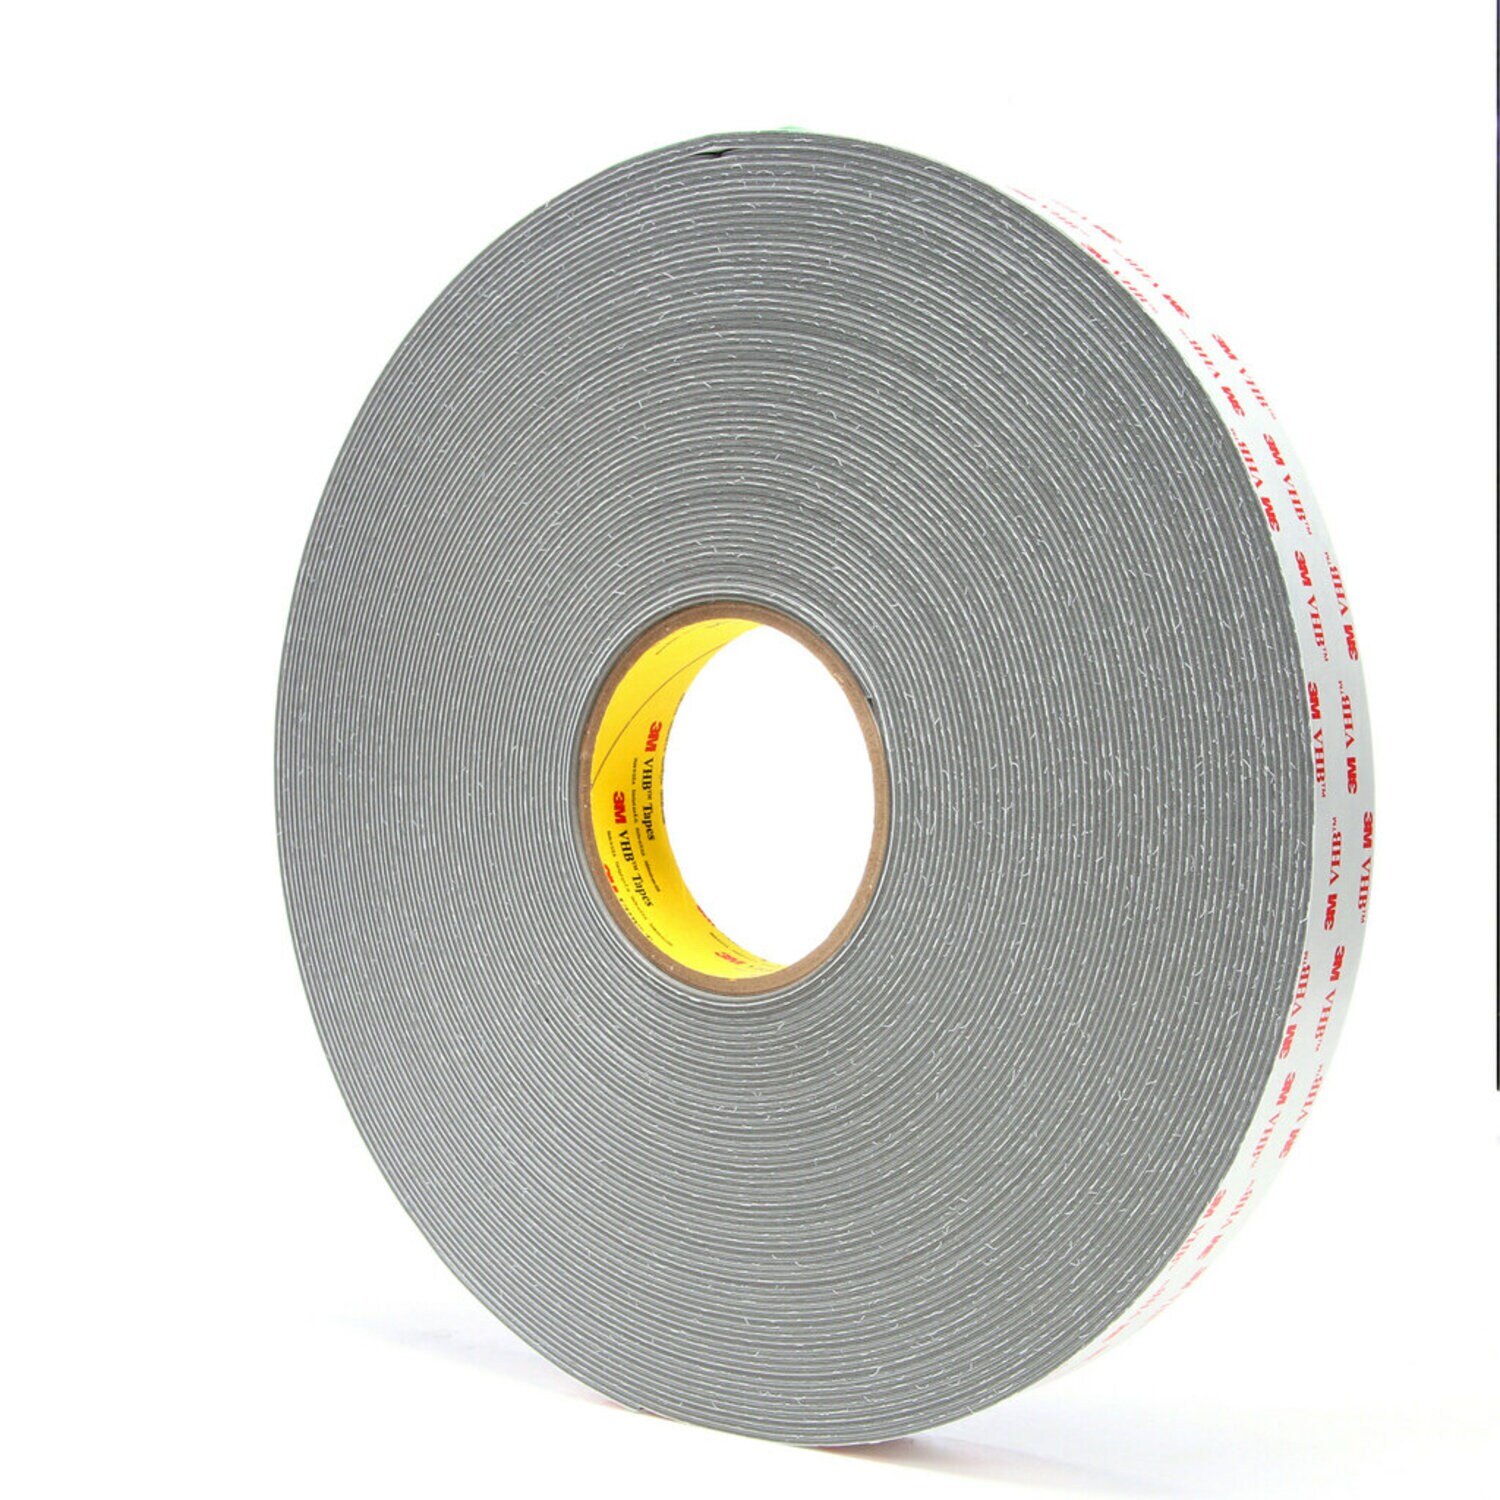 7010045125 - 3M High Temperature Nylon Film Tape 8555, White, 1 in x 72 yd, 7 mil,
36 rolls per case